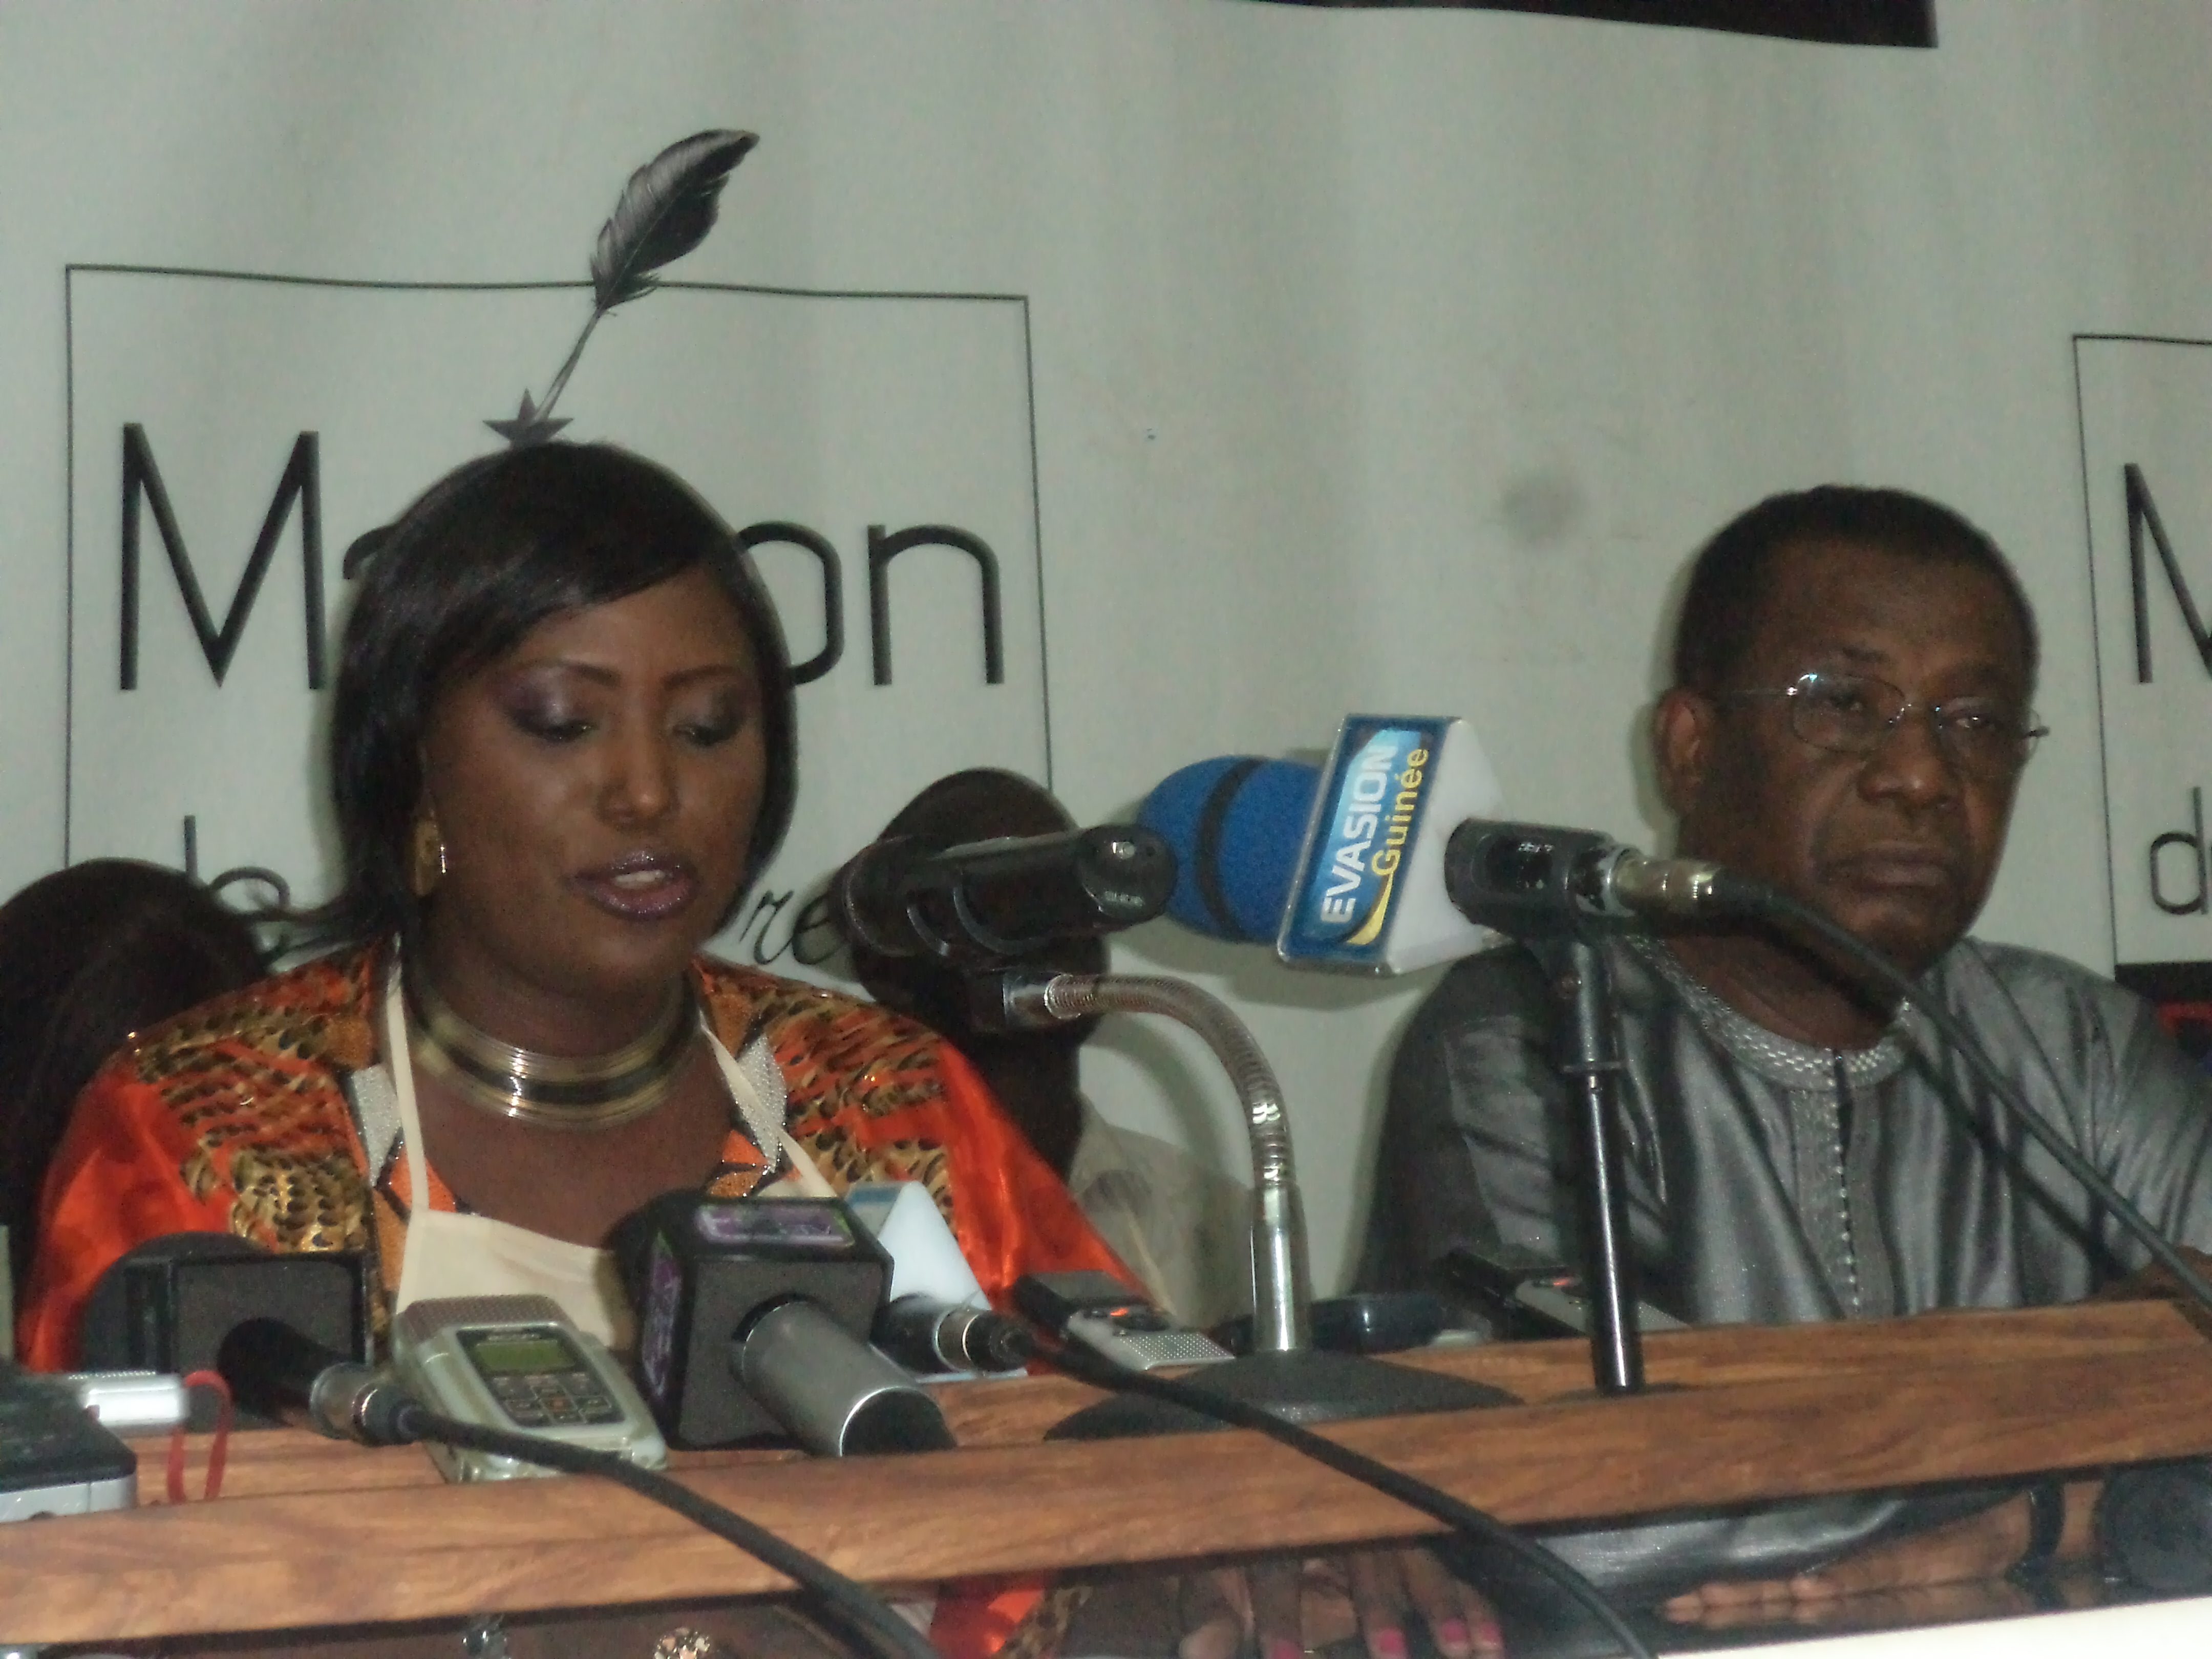 2014.8.13 Guinea: SYNEM press conference